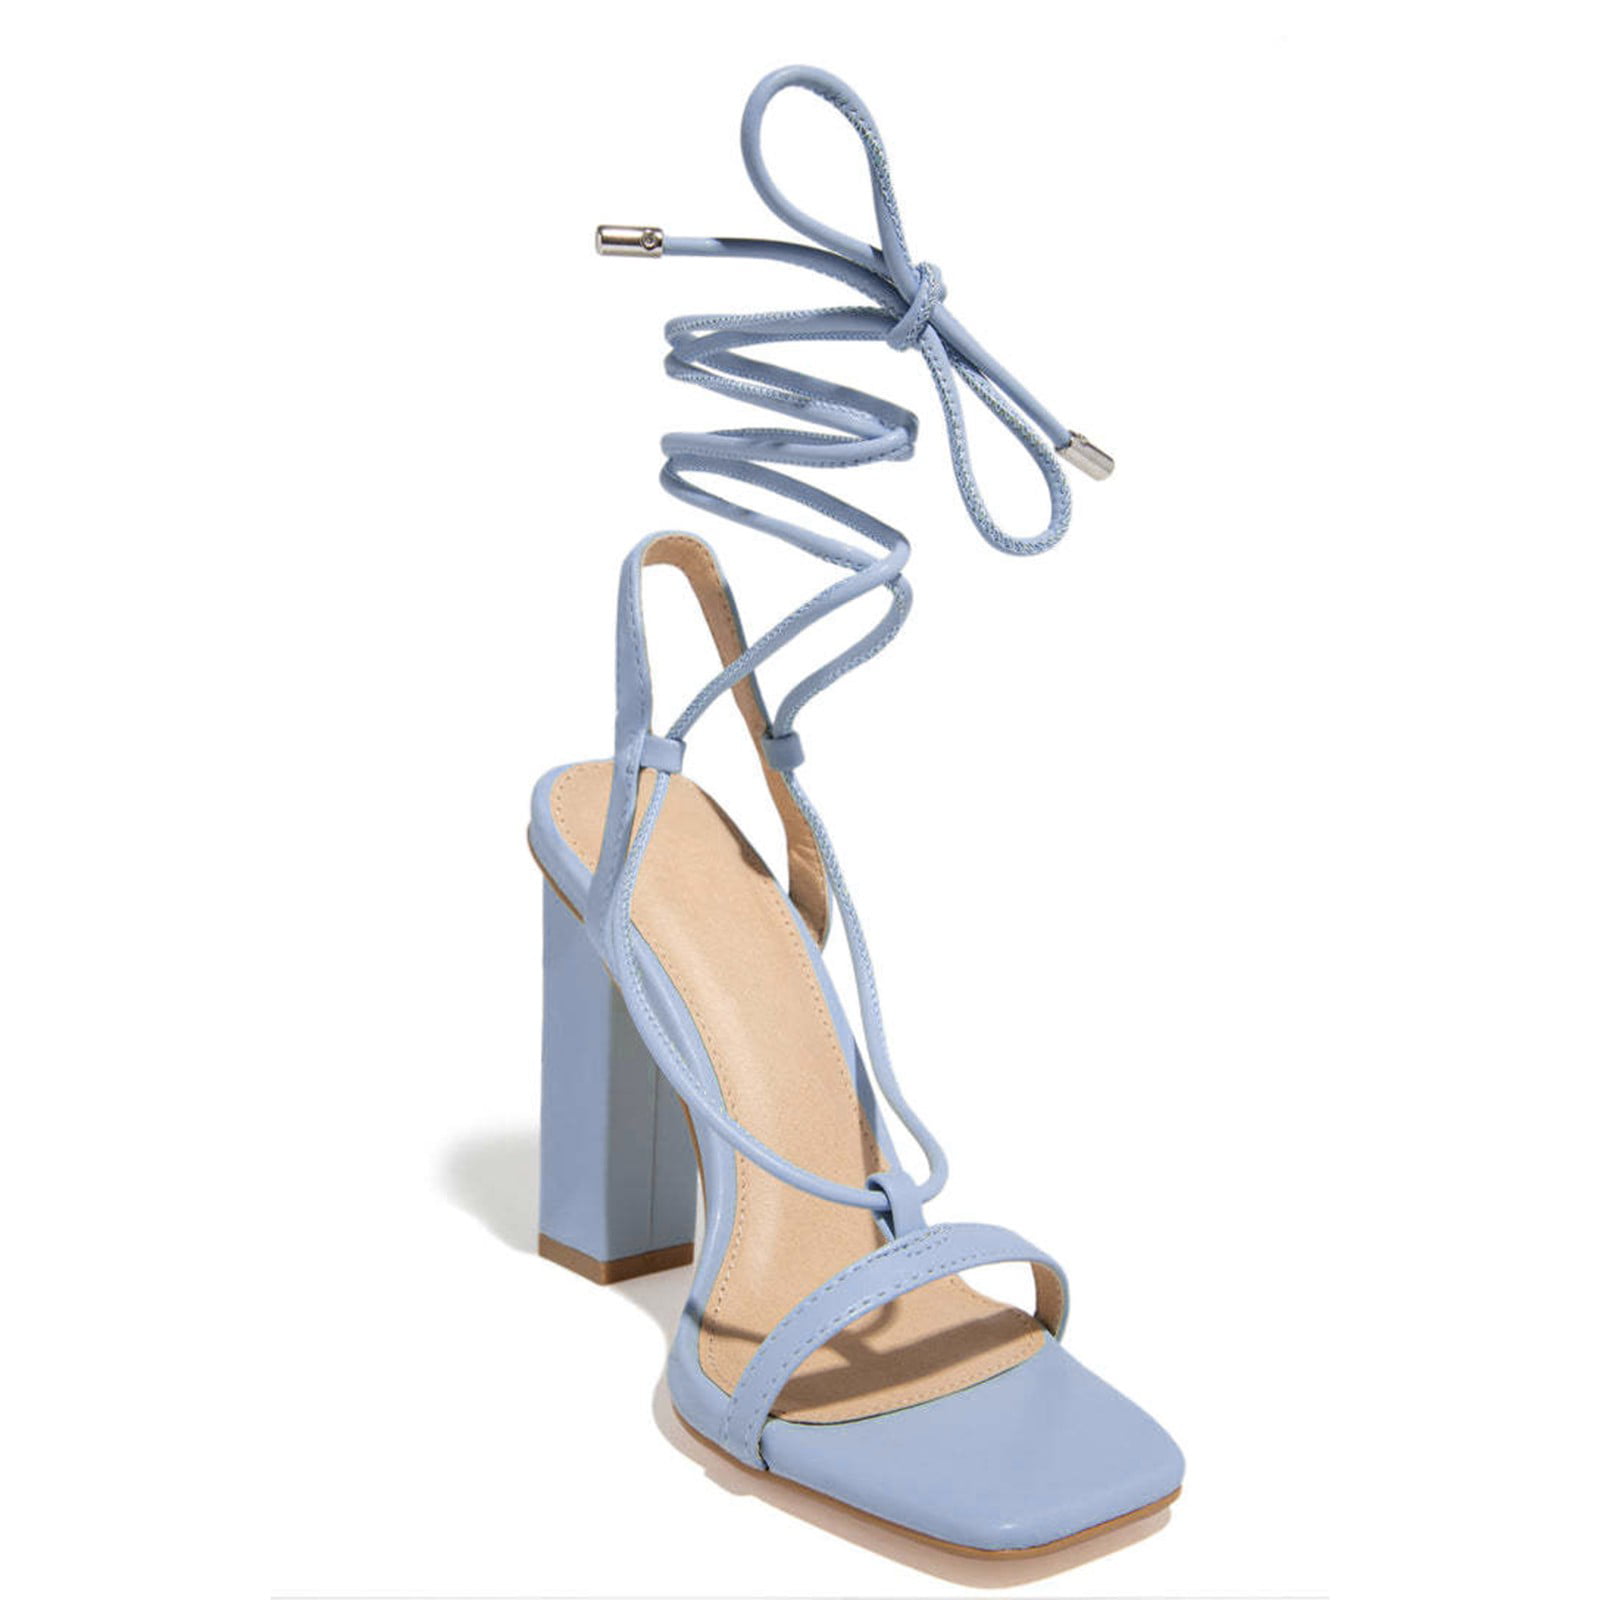 Earthy Colour Block heels – Shoe That Fits You